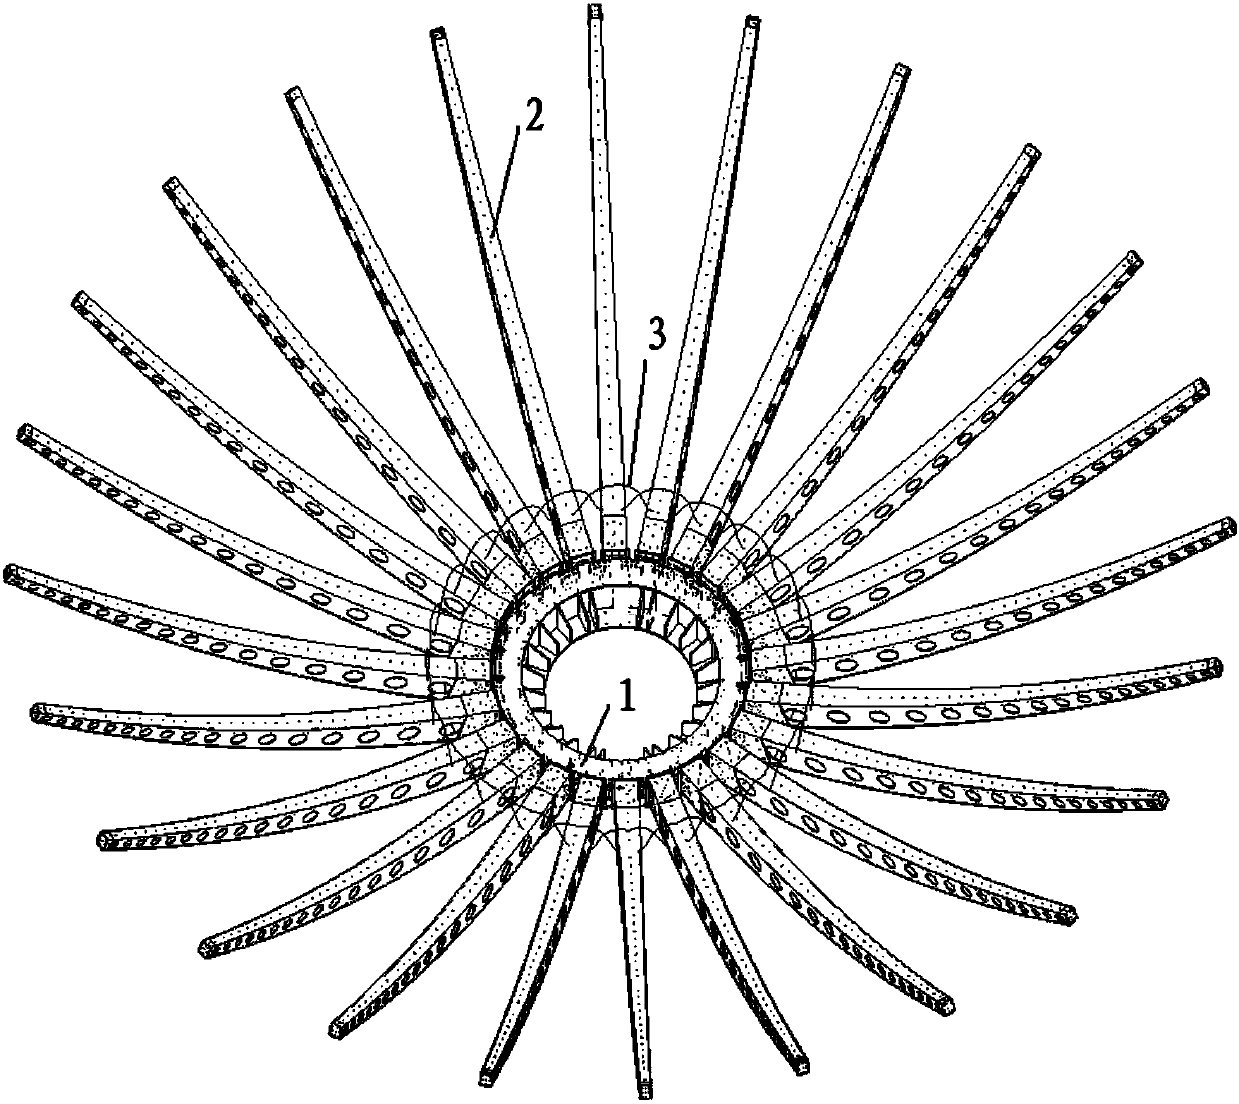 Umbrella antenna unfolding synchronization device